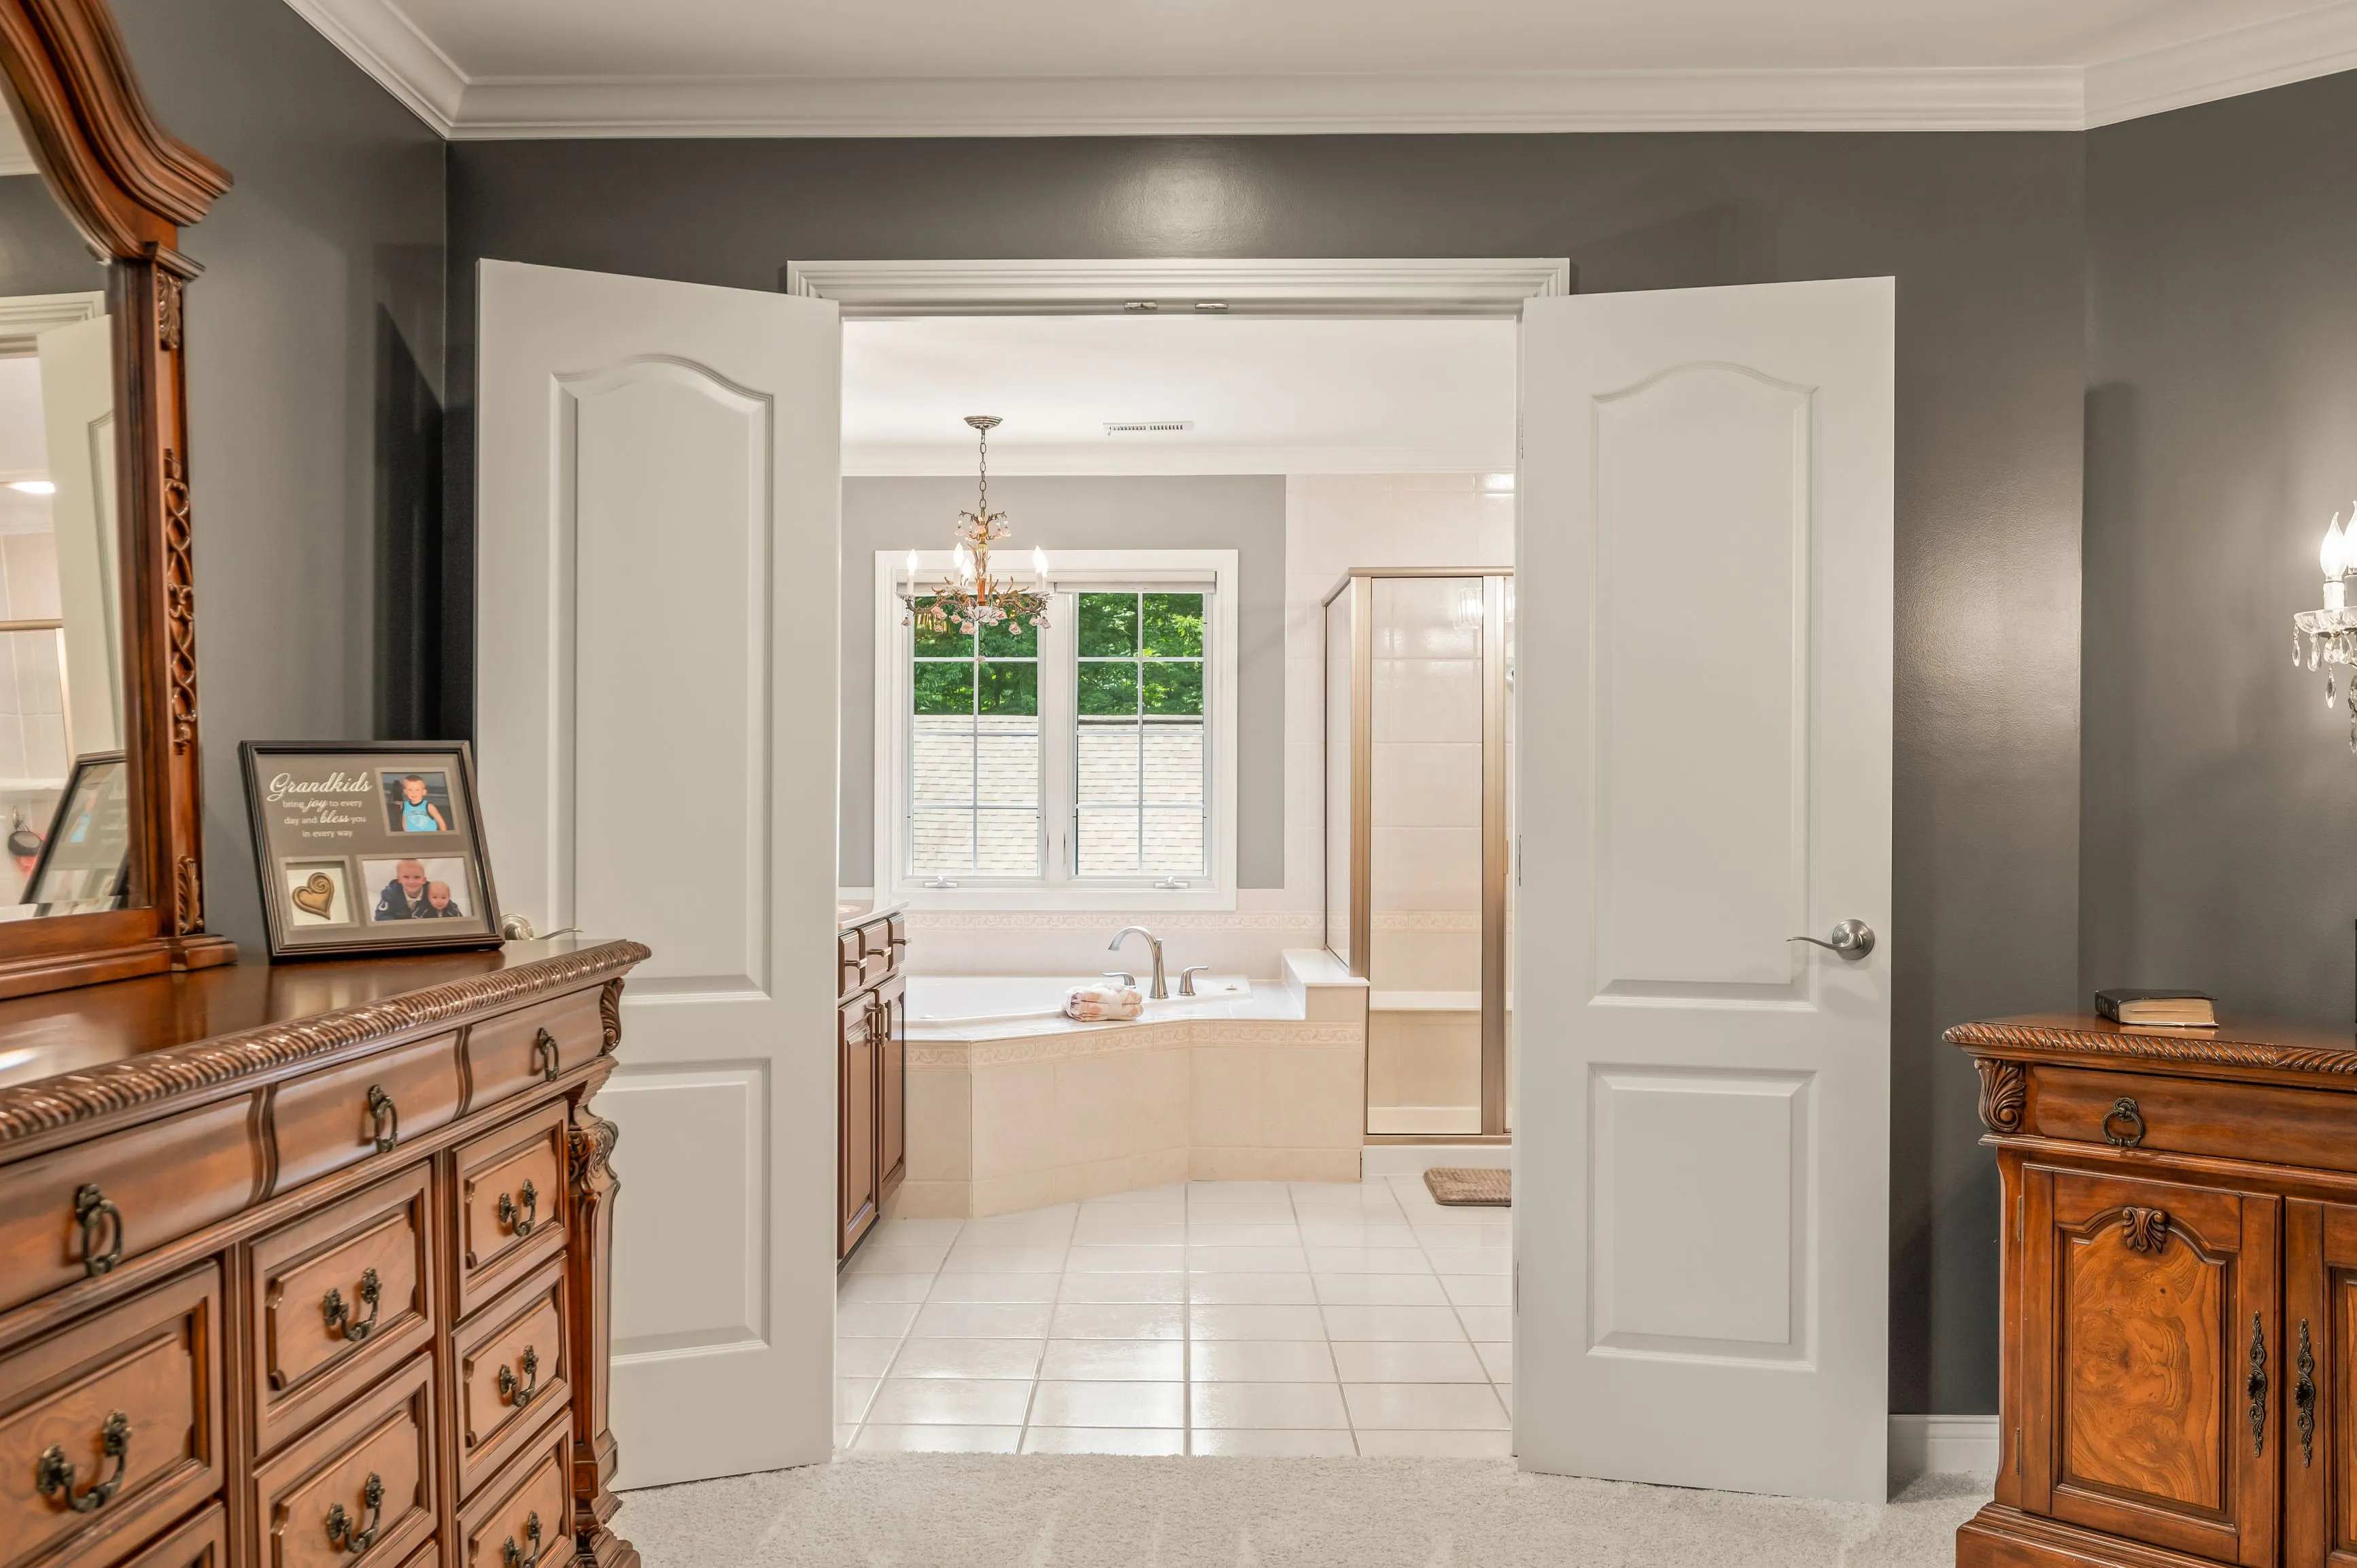 Elegant bathroom interior with double vanity, tiled flooring, and a bathtub near a window.